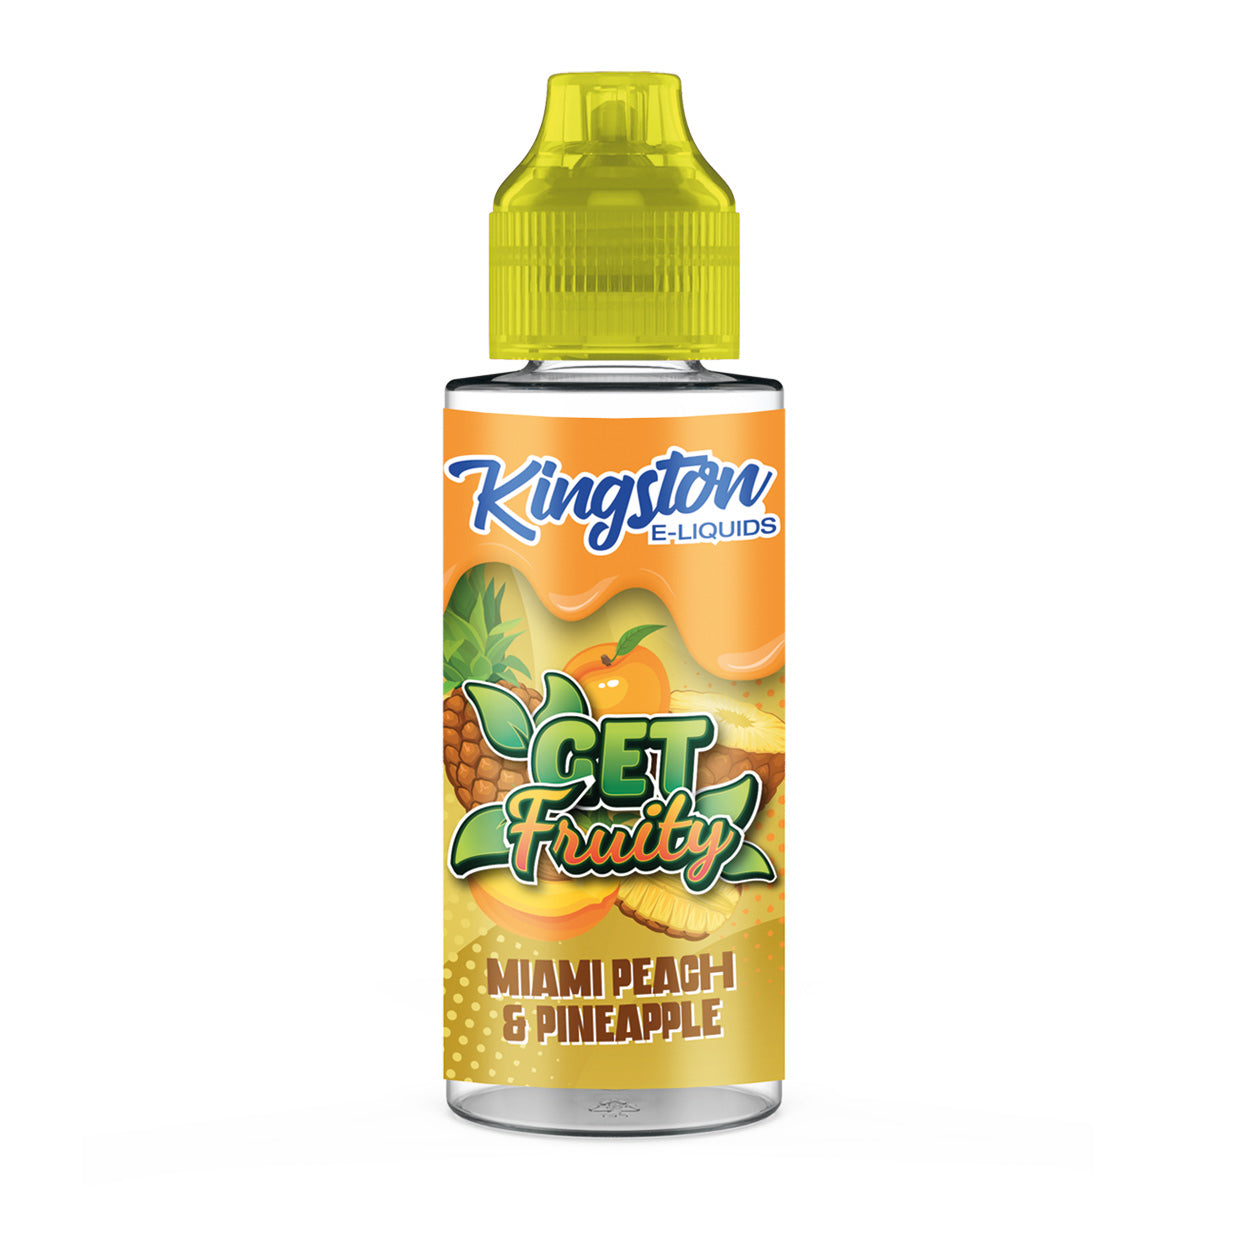 Kingston-Get-Fruity-Miami-Peach-Pineapple-kingston-eliquids-100ml-vape-juice-shortfill-eliquidsoutlet